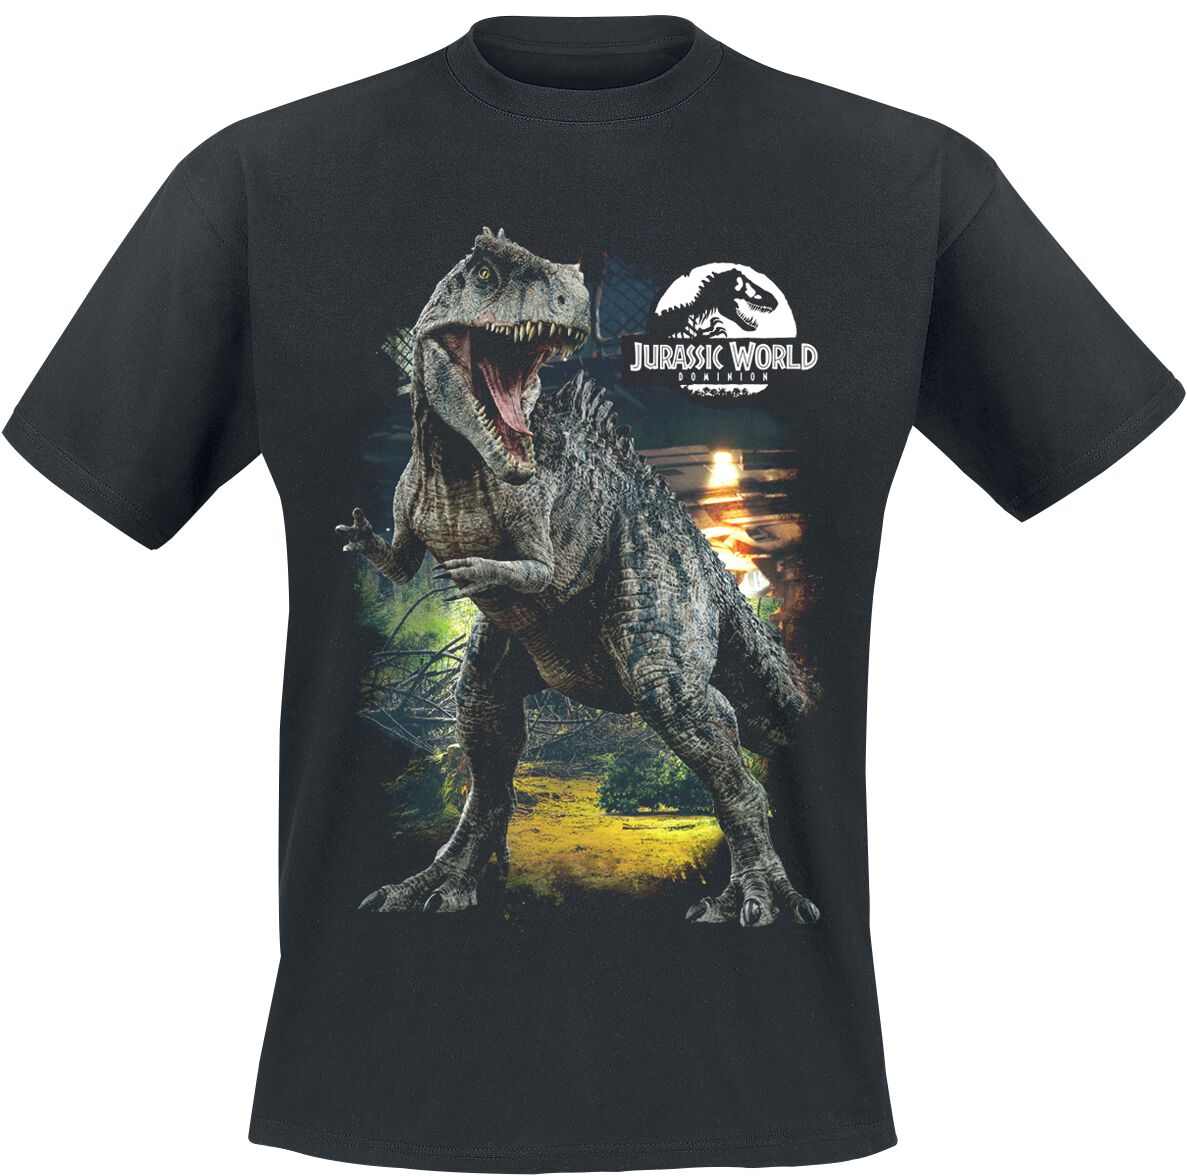 Jurassic Park Jurassic World - Dinosaur Classic T-Shirt black